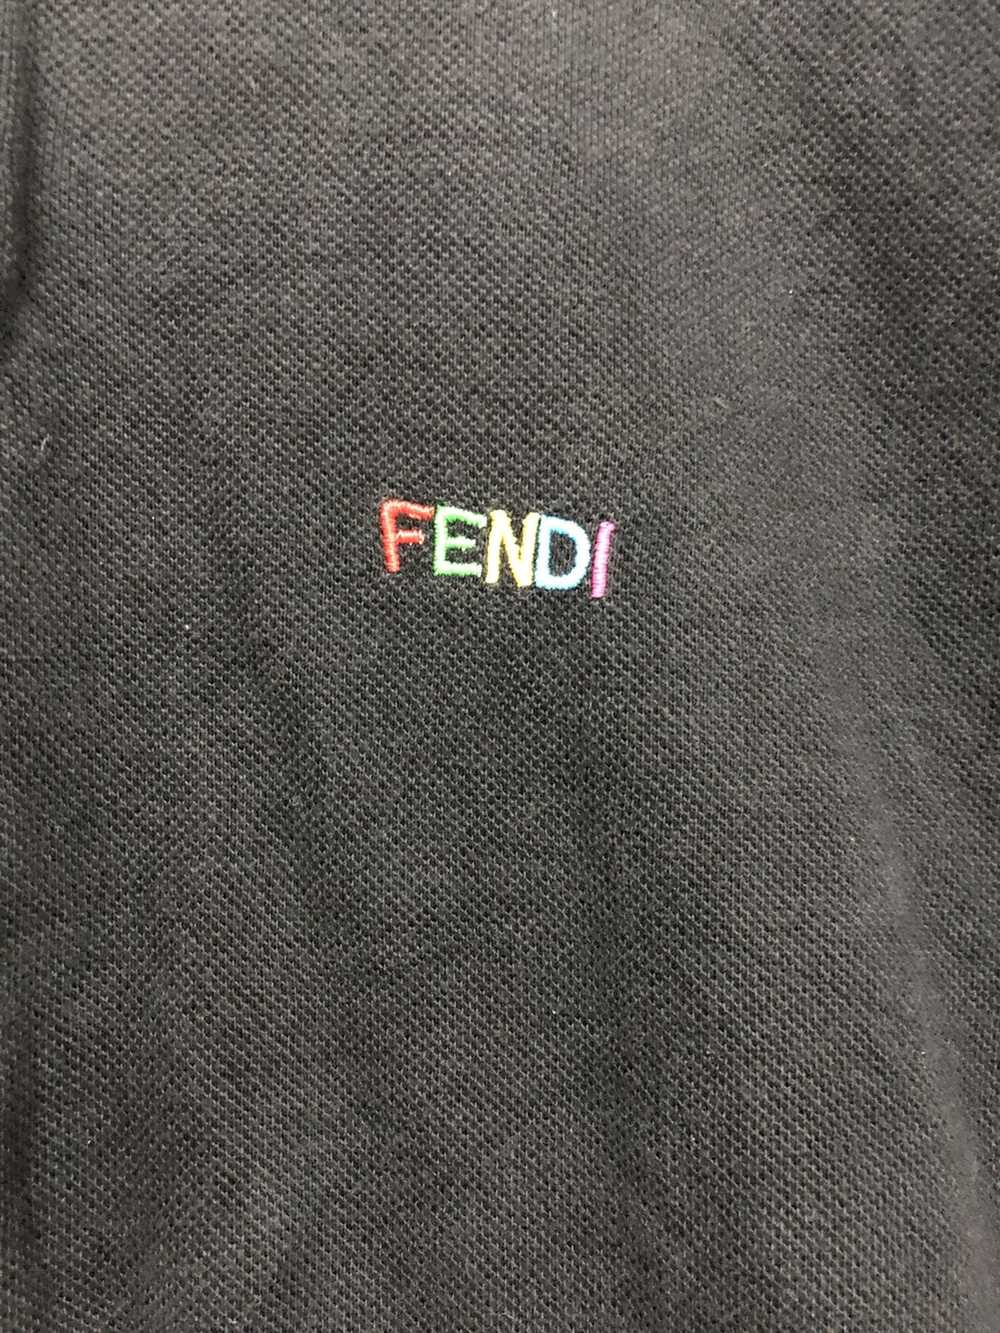 Fendi × Vintage Vintage FENDI Long Sleeve Shirt - image 5